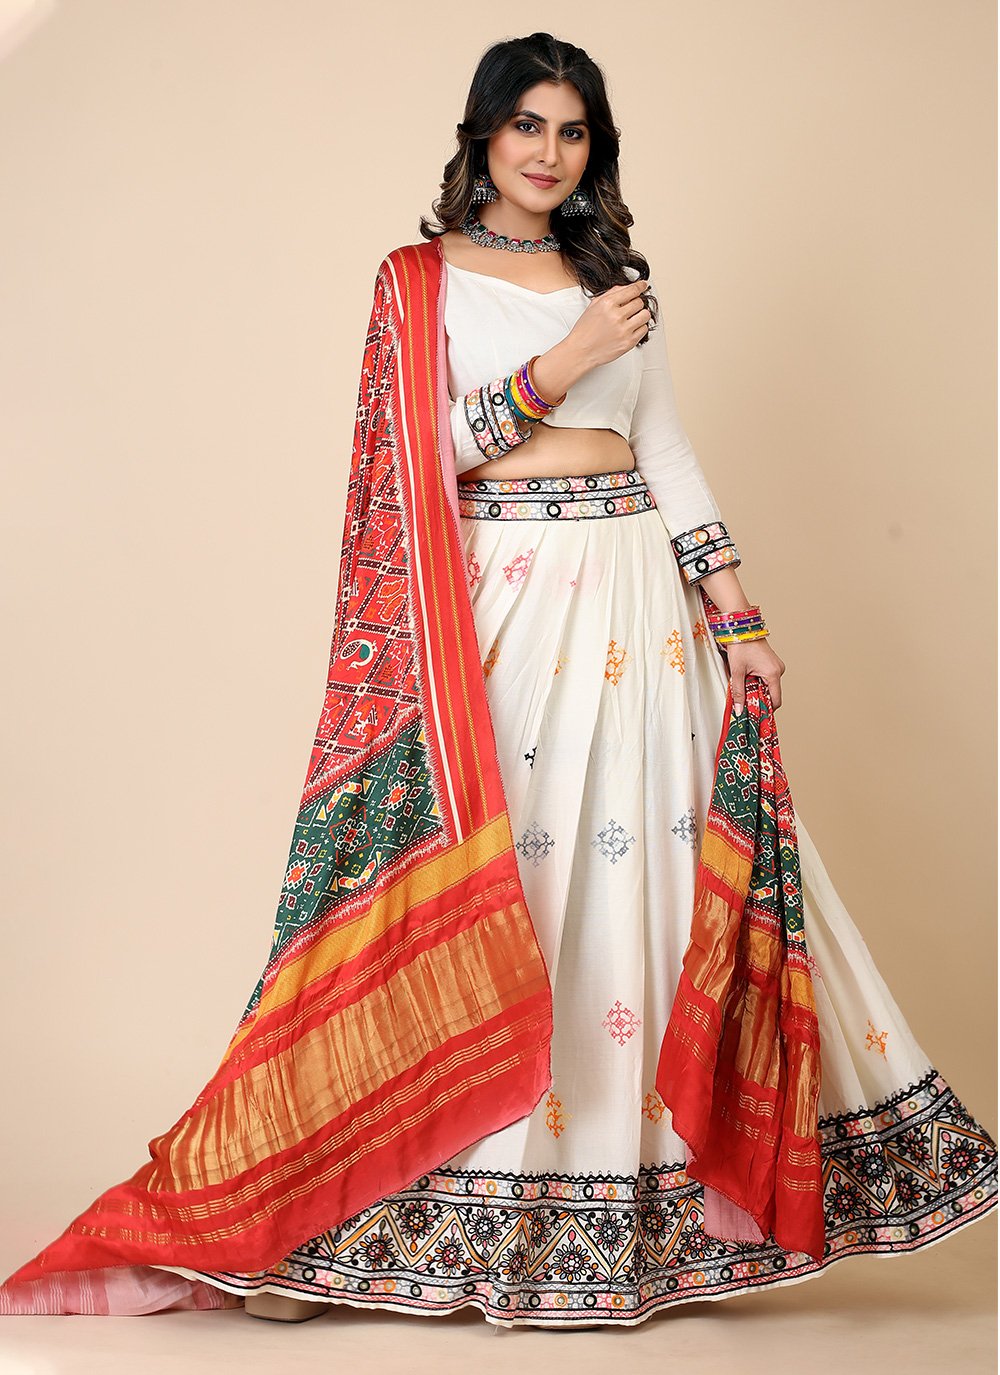 Rajasthani Lehenga choli Designs/ Royal Rajputi outfits ideas for wedding  /Royal Wedding Outfits - YouTube